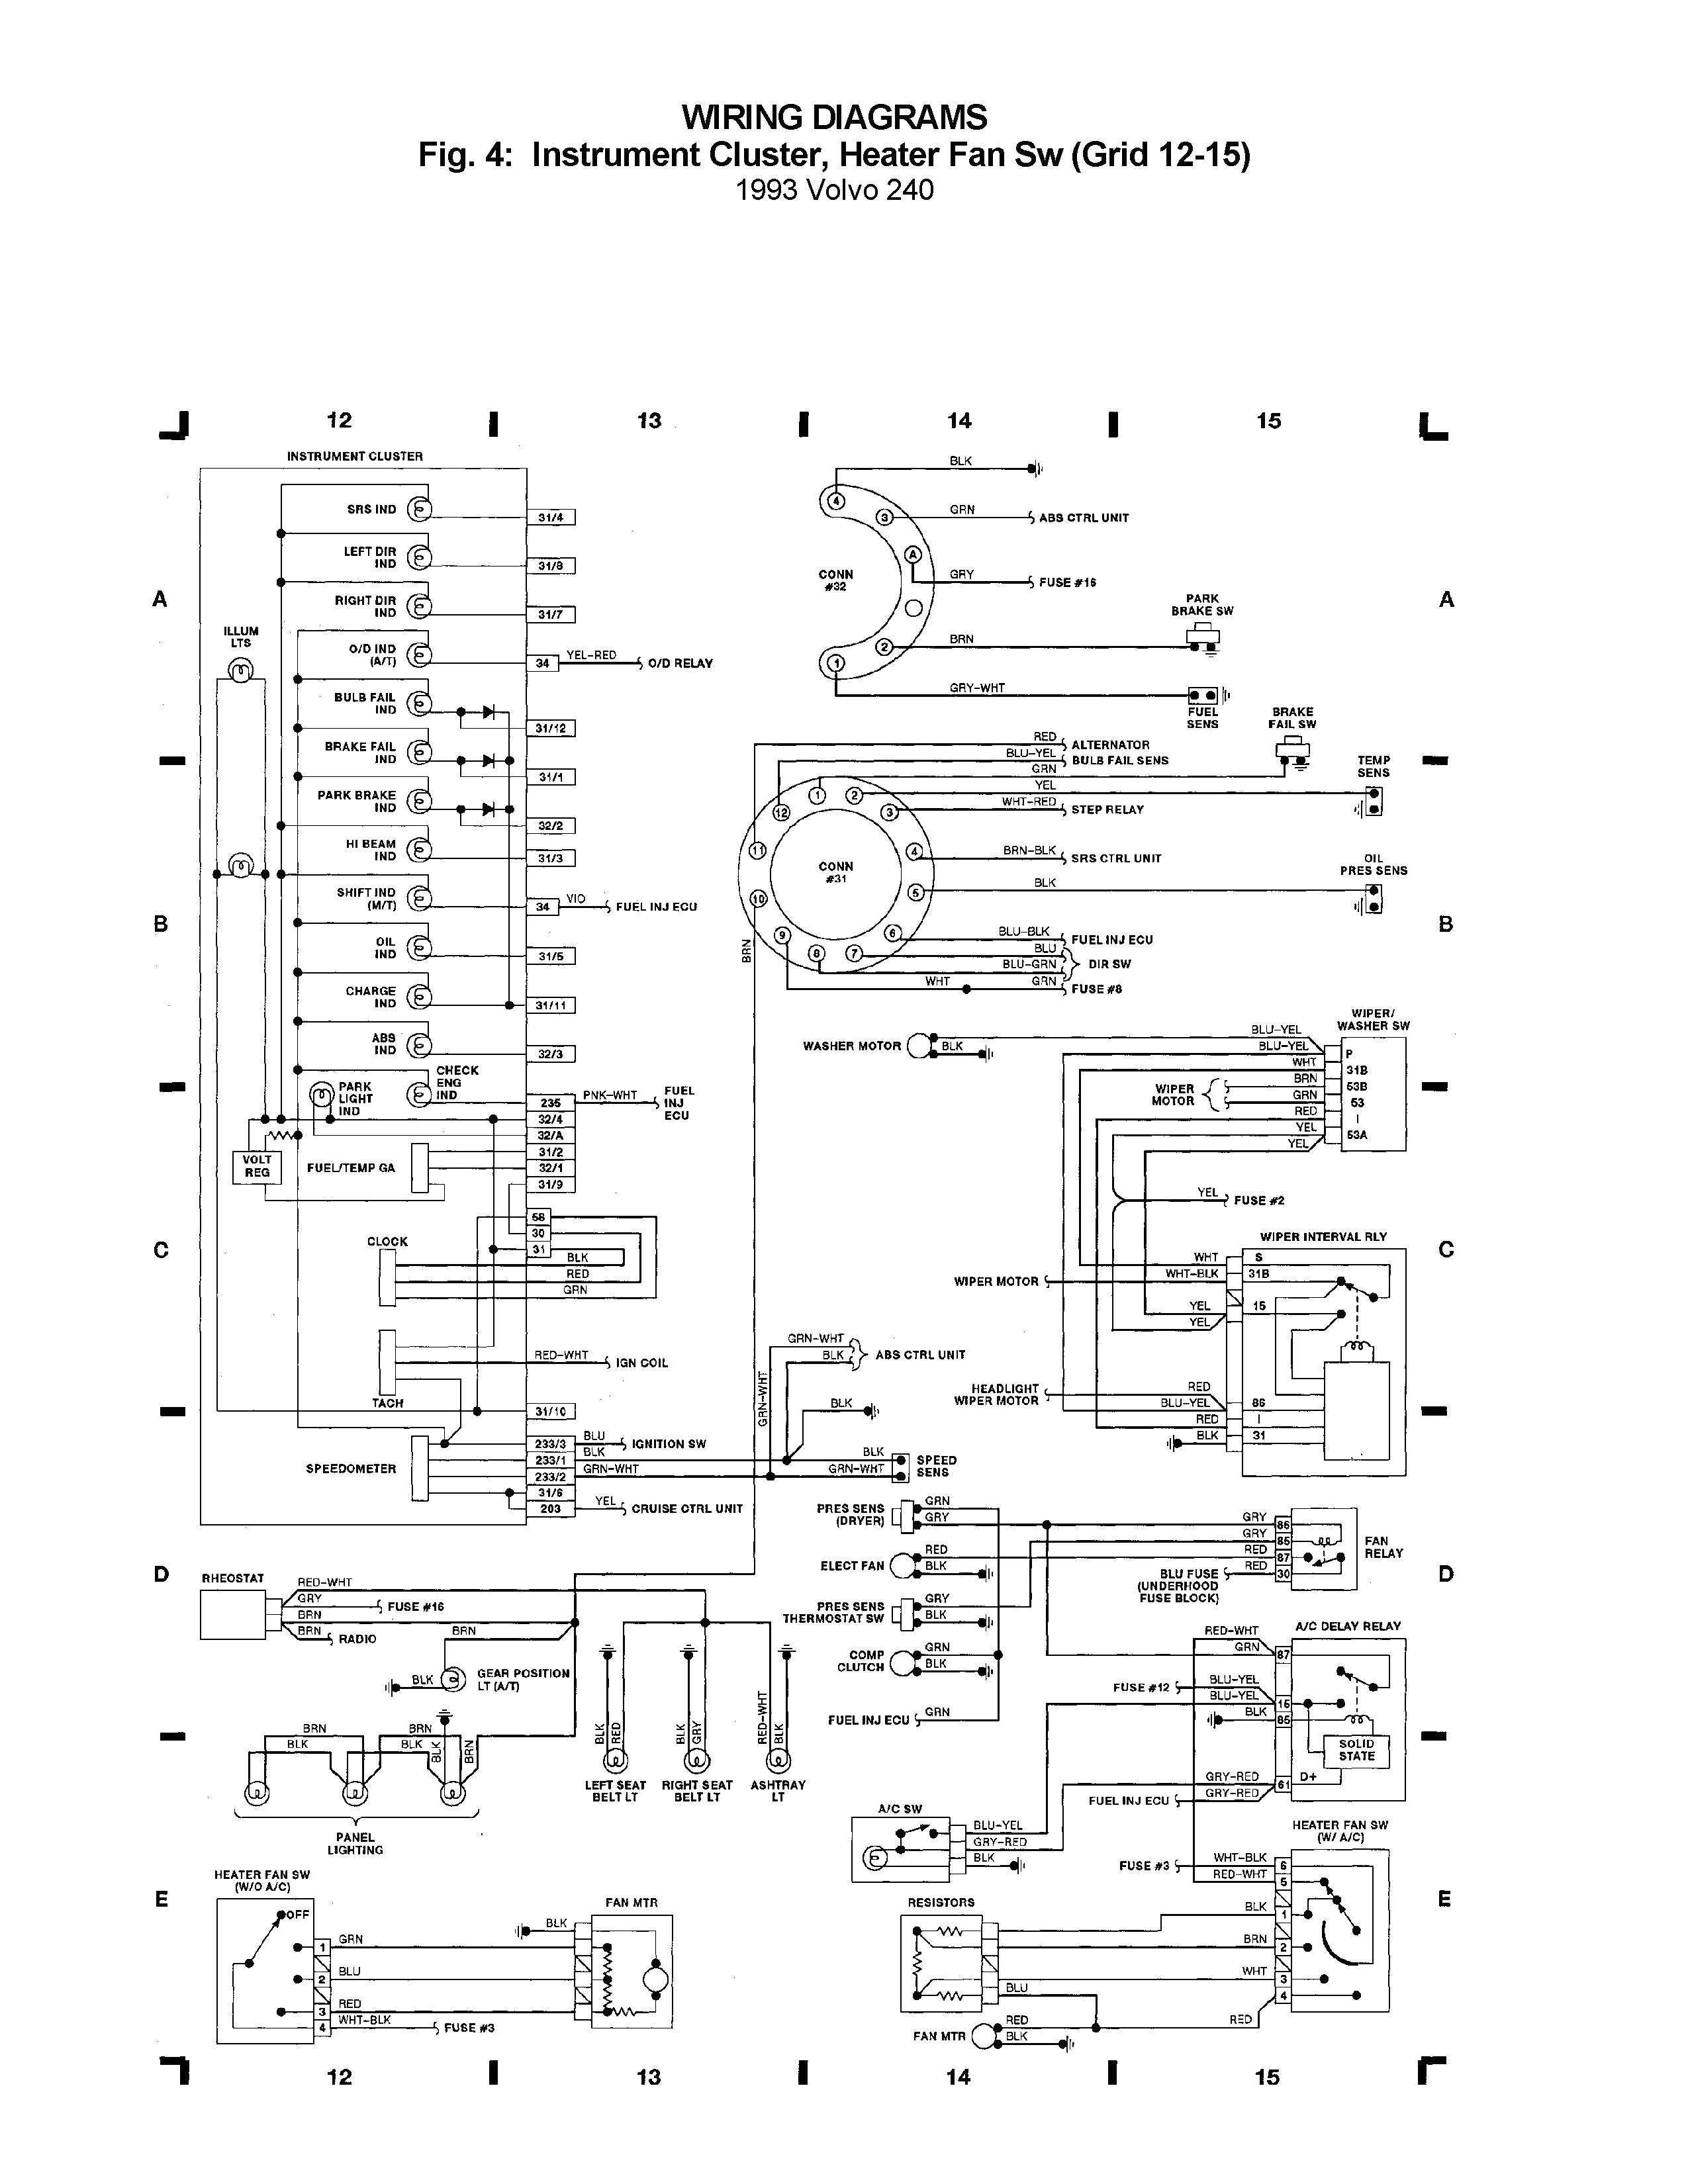 volvo 240 wiring diagram instrument cluster heater fan sw 1993 jpg